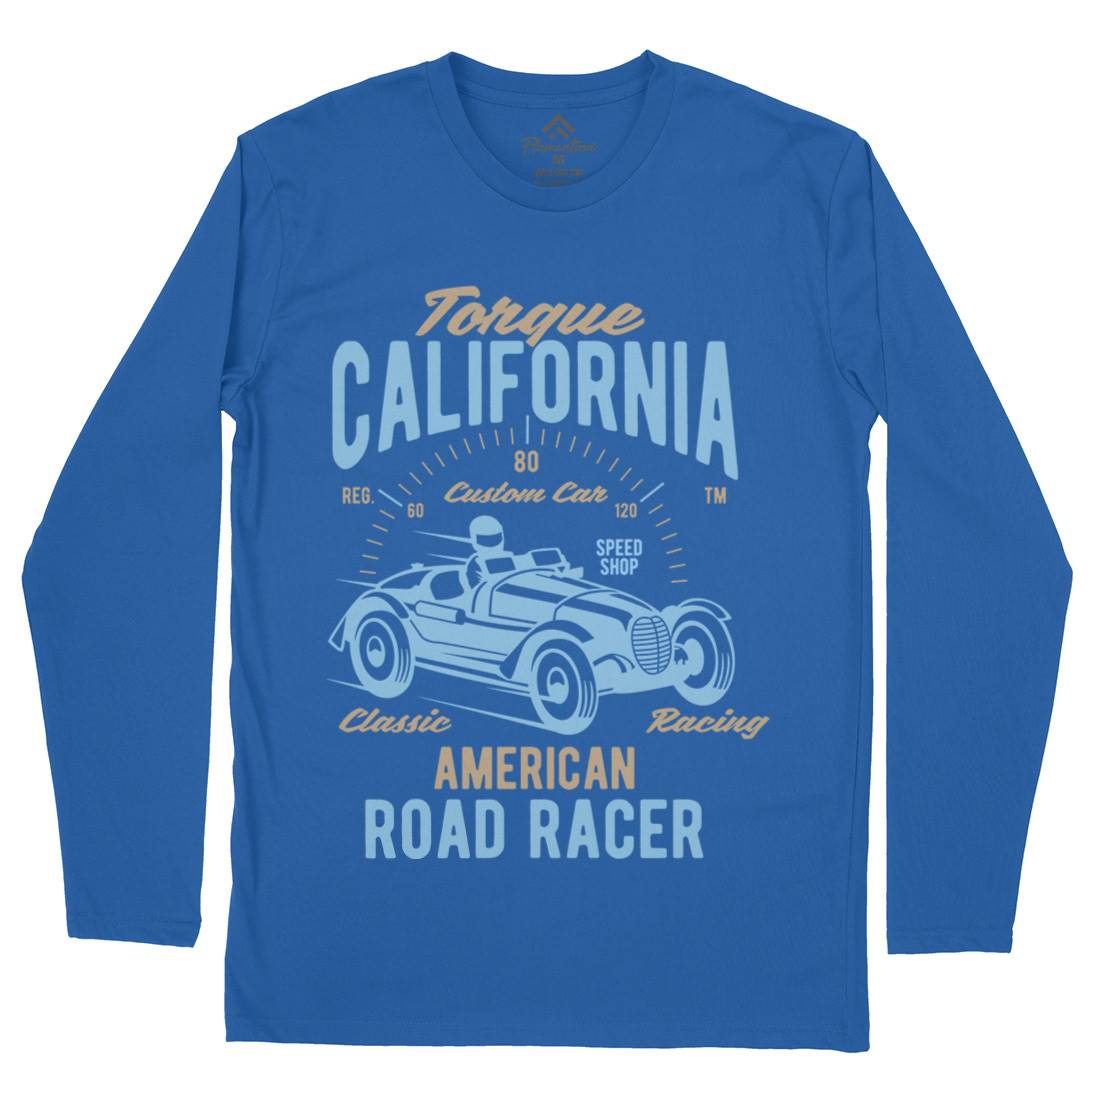 Torque California Mens Long Sleeve T-Shirt Cars B468